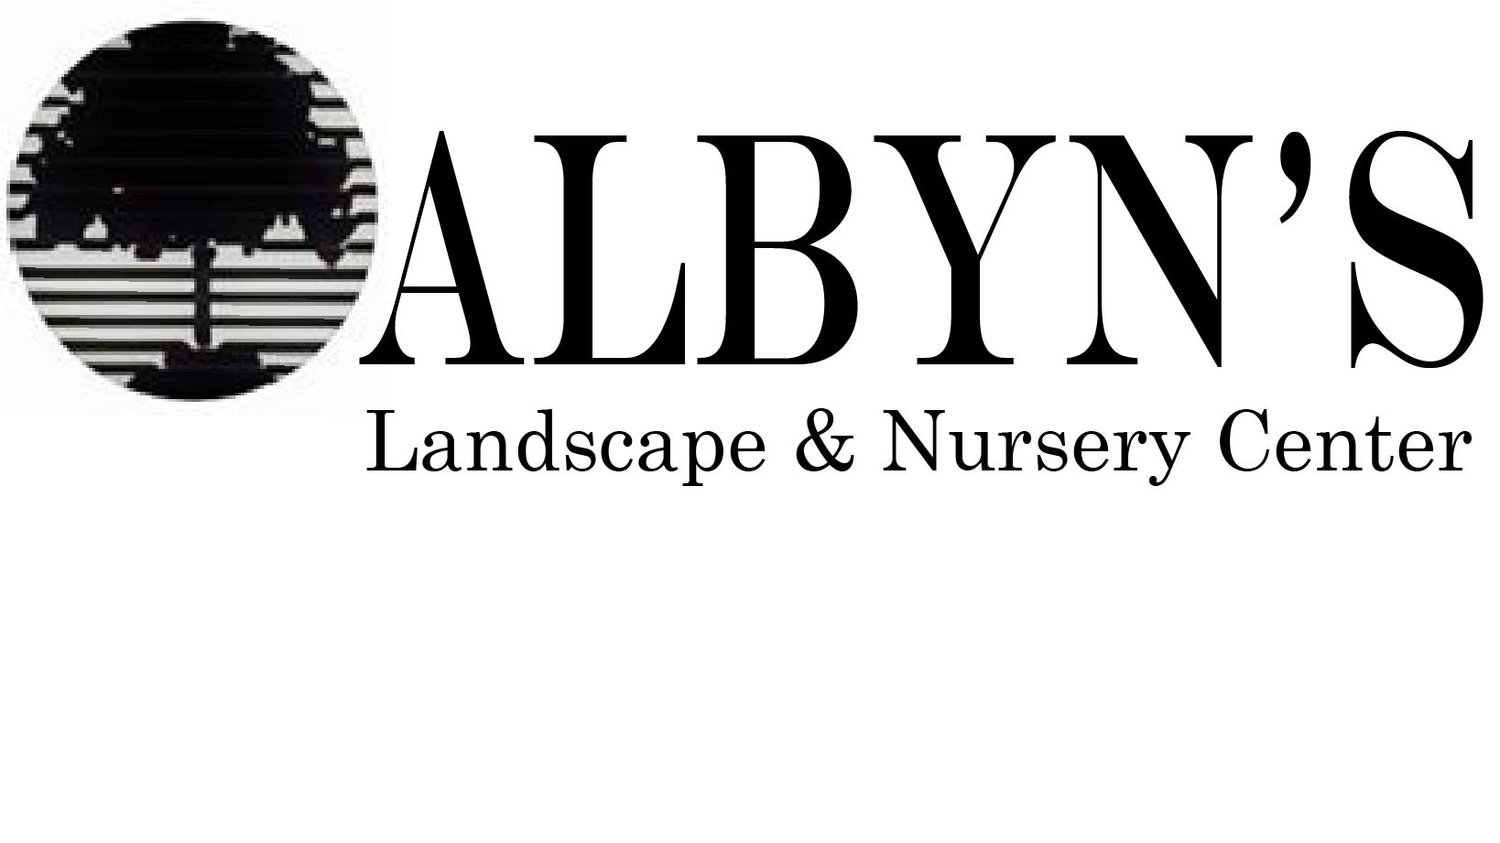 ALBYN'S LANDSCAPE & NURSERY CENTER